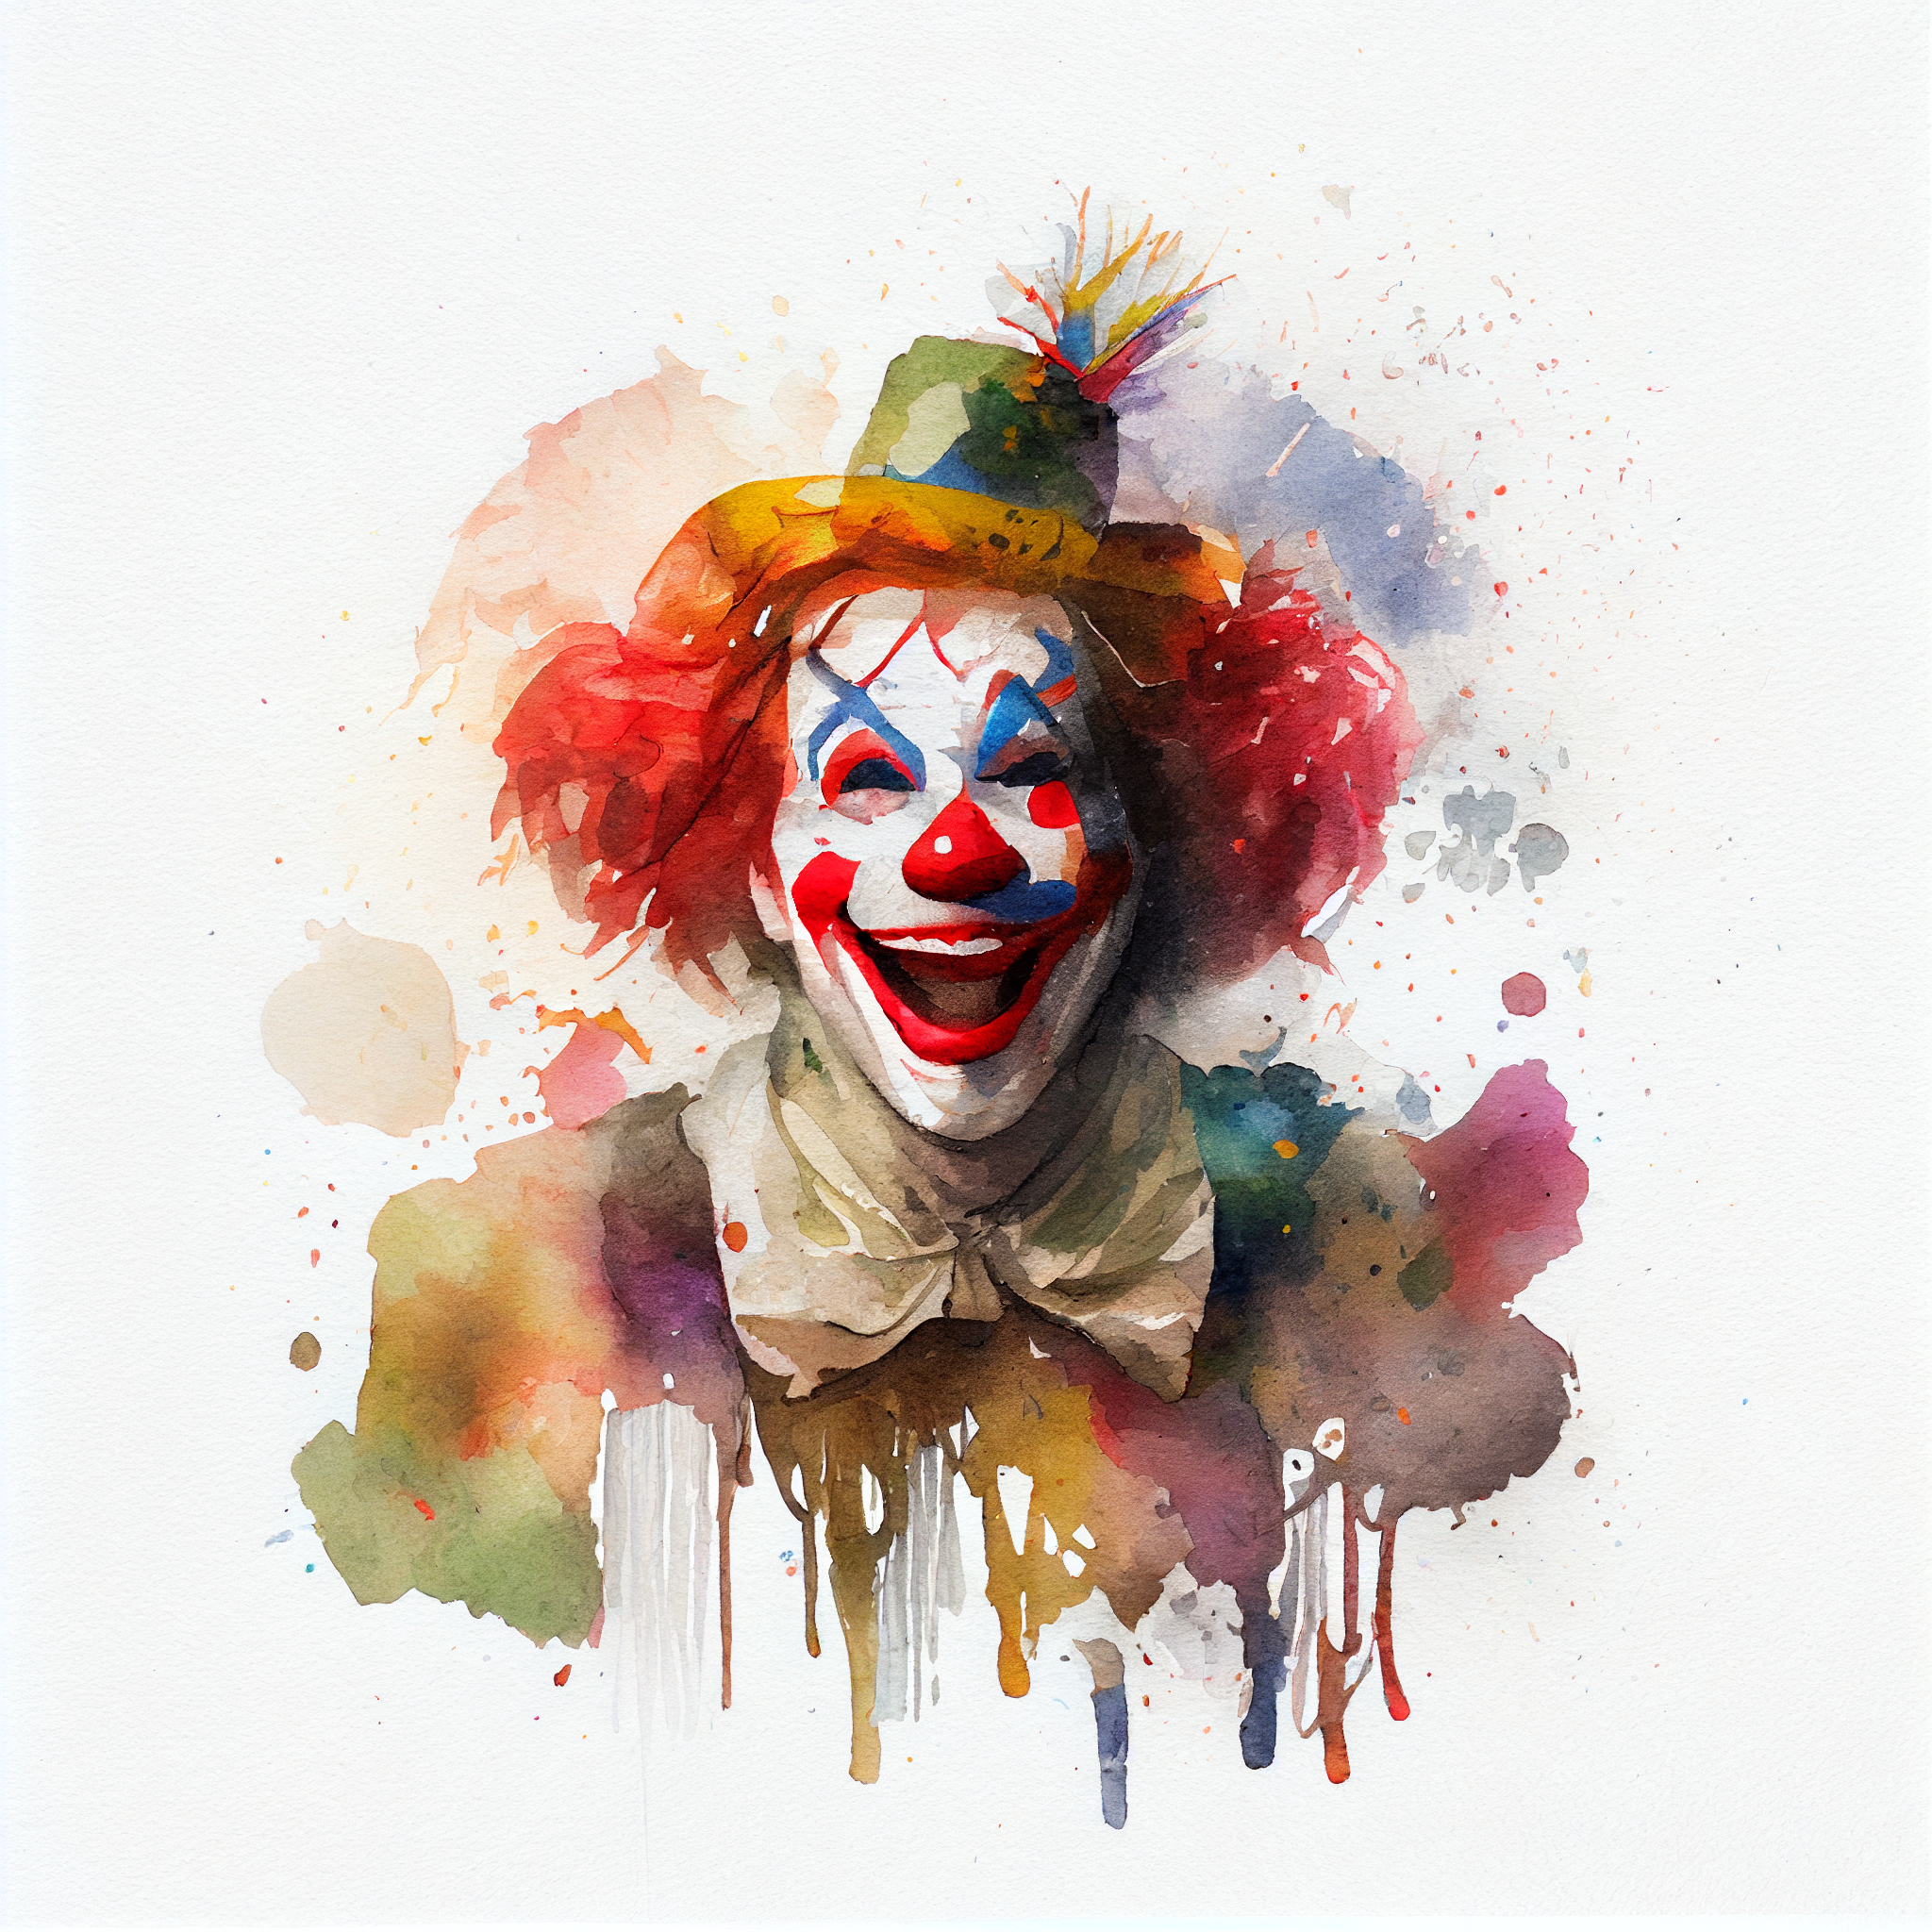 Joyful Brushstrokes: A Watercolor Art Print of a Happy Clown on White Background